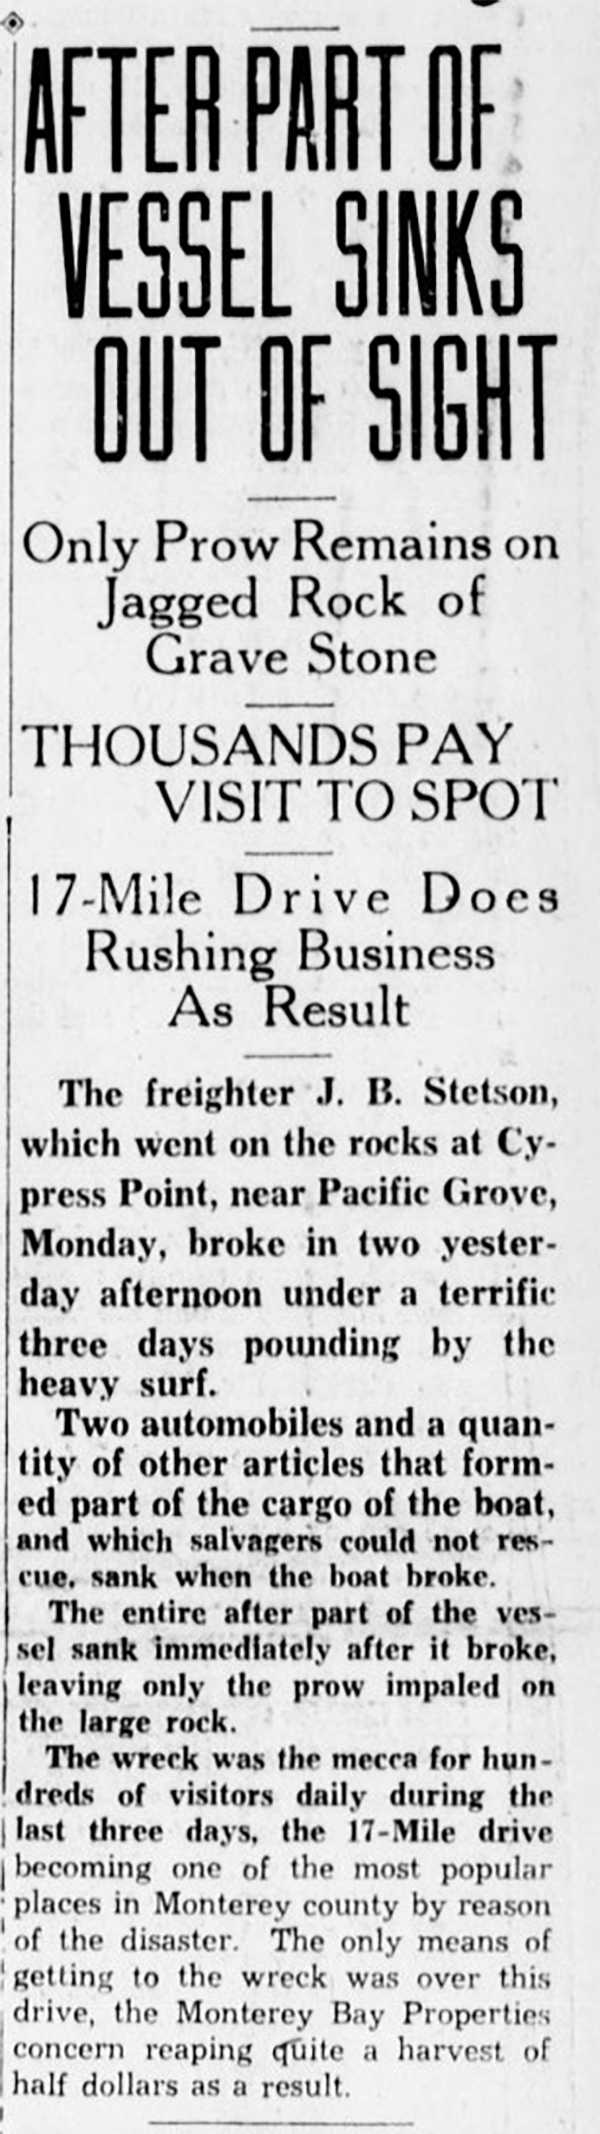 Newspaper clipping from Santa Cruz Sentinel 7SEP1934 p1 col 5-8 of shipwreck J.B. Stetson